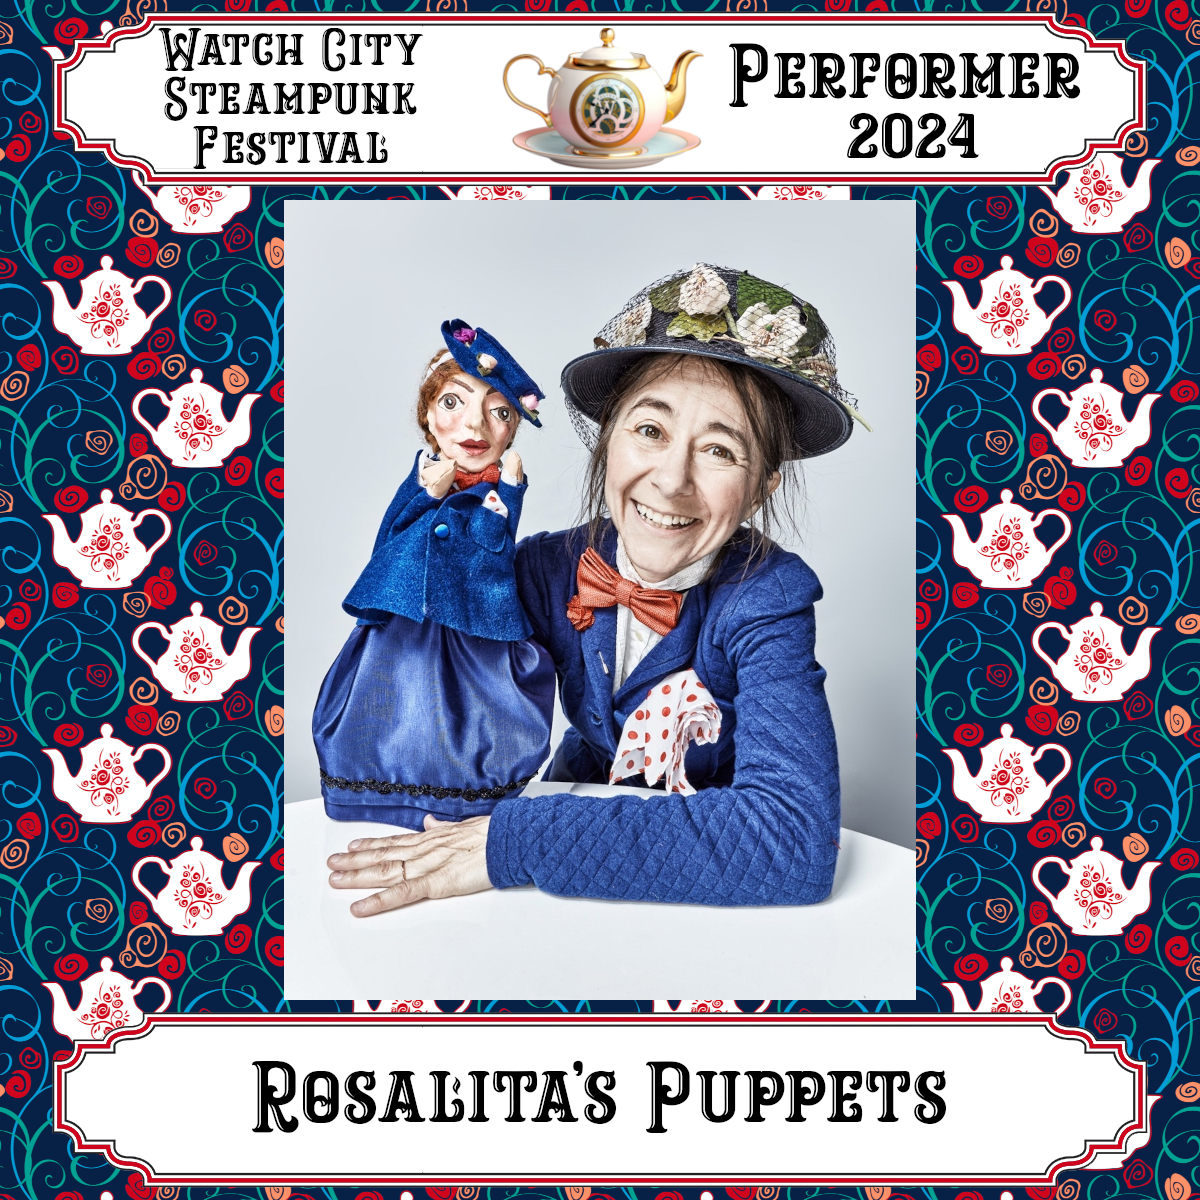 Rosalita’s Puppets